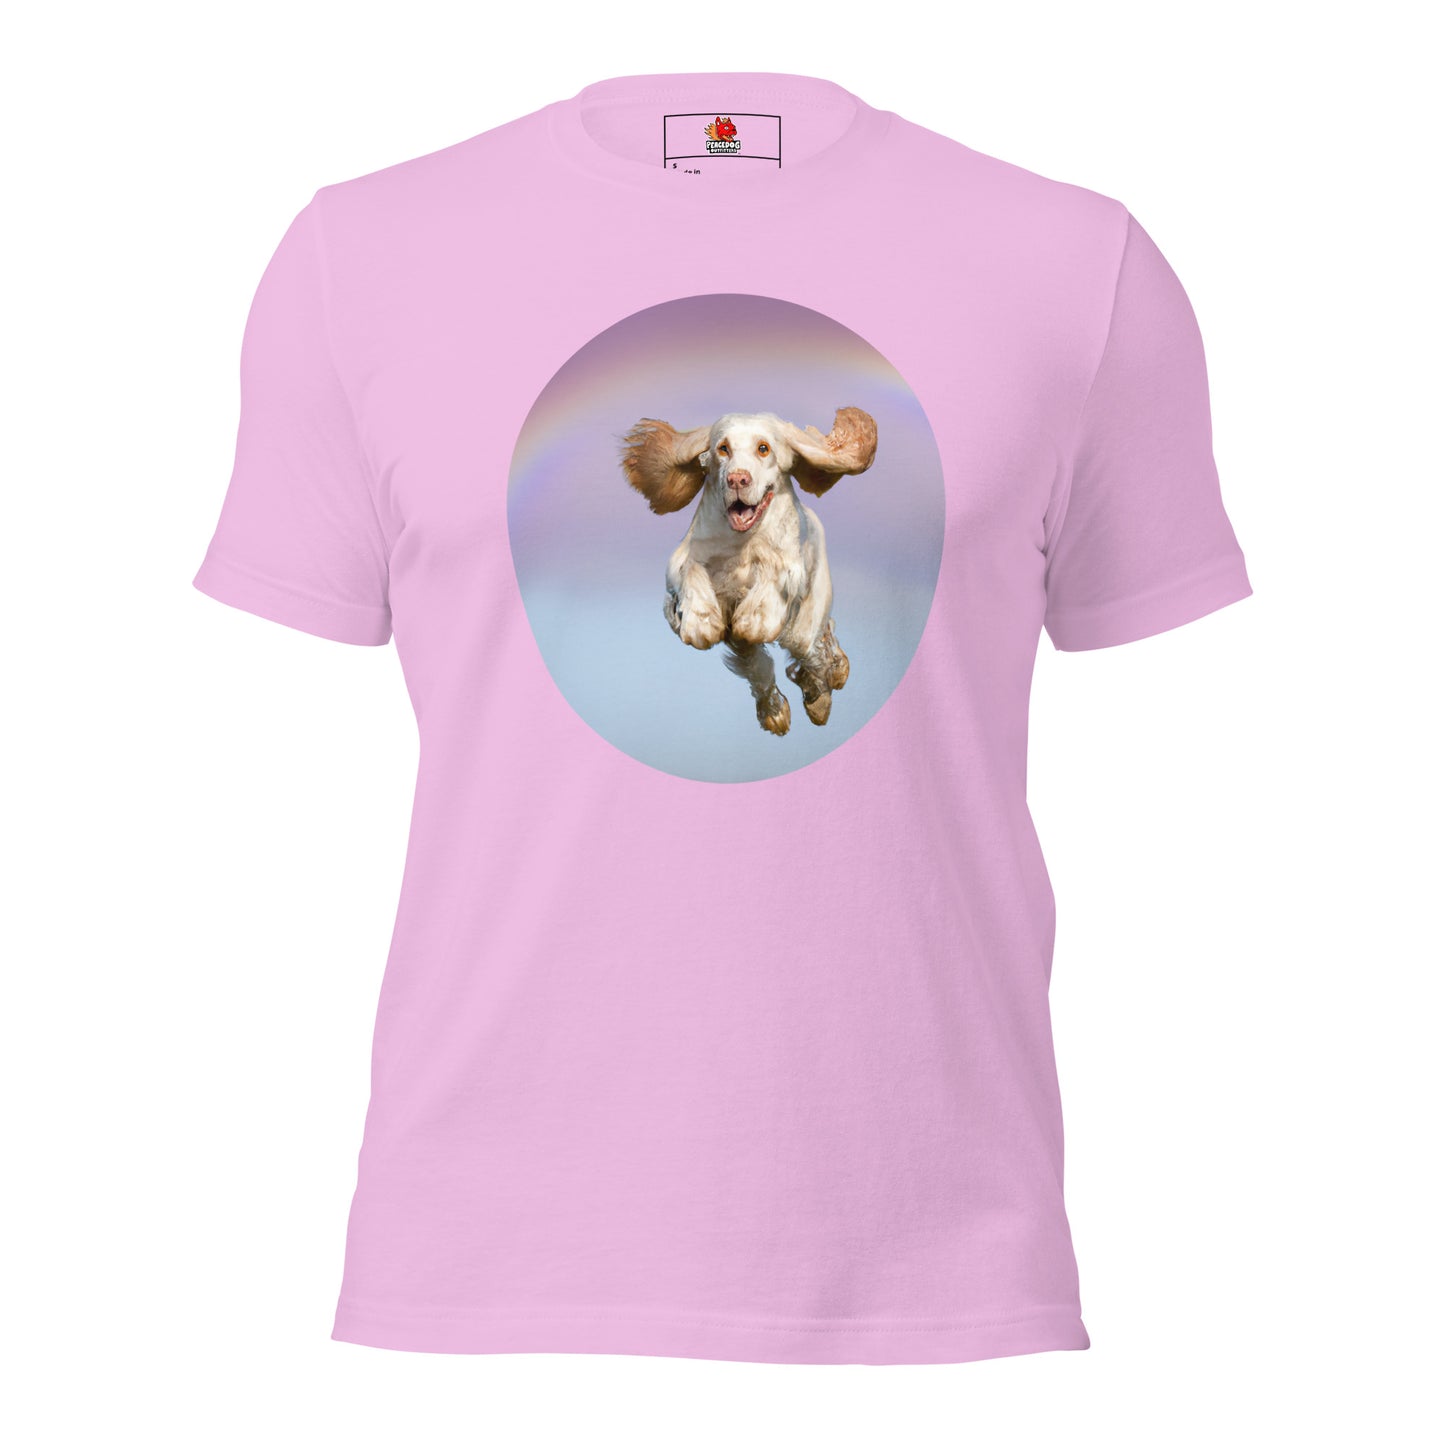 Spaniel Flying through a Rainbow T-shirt